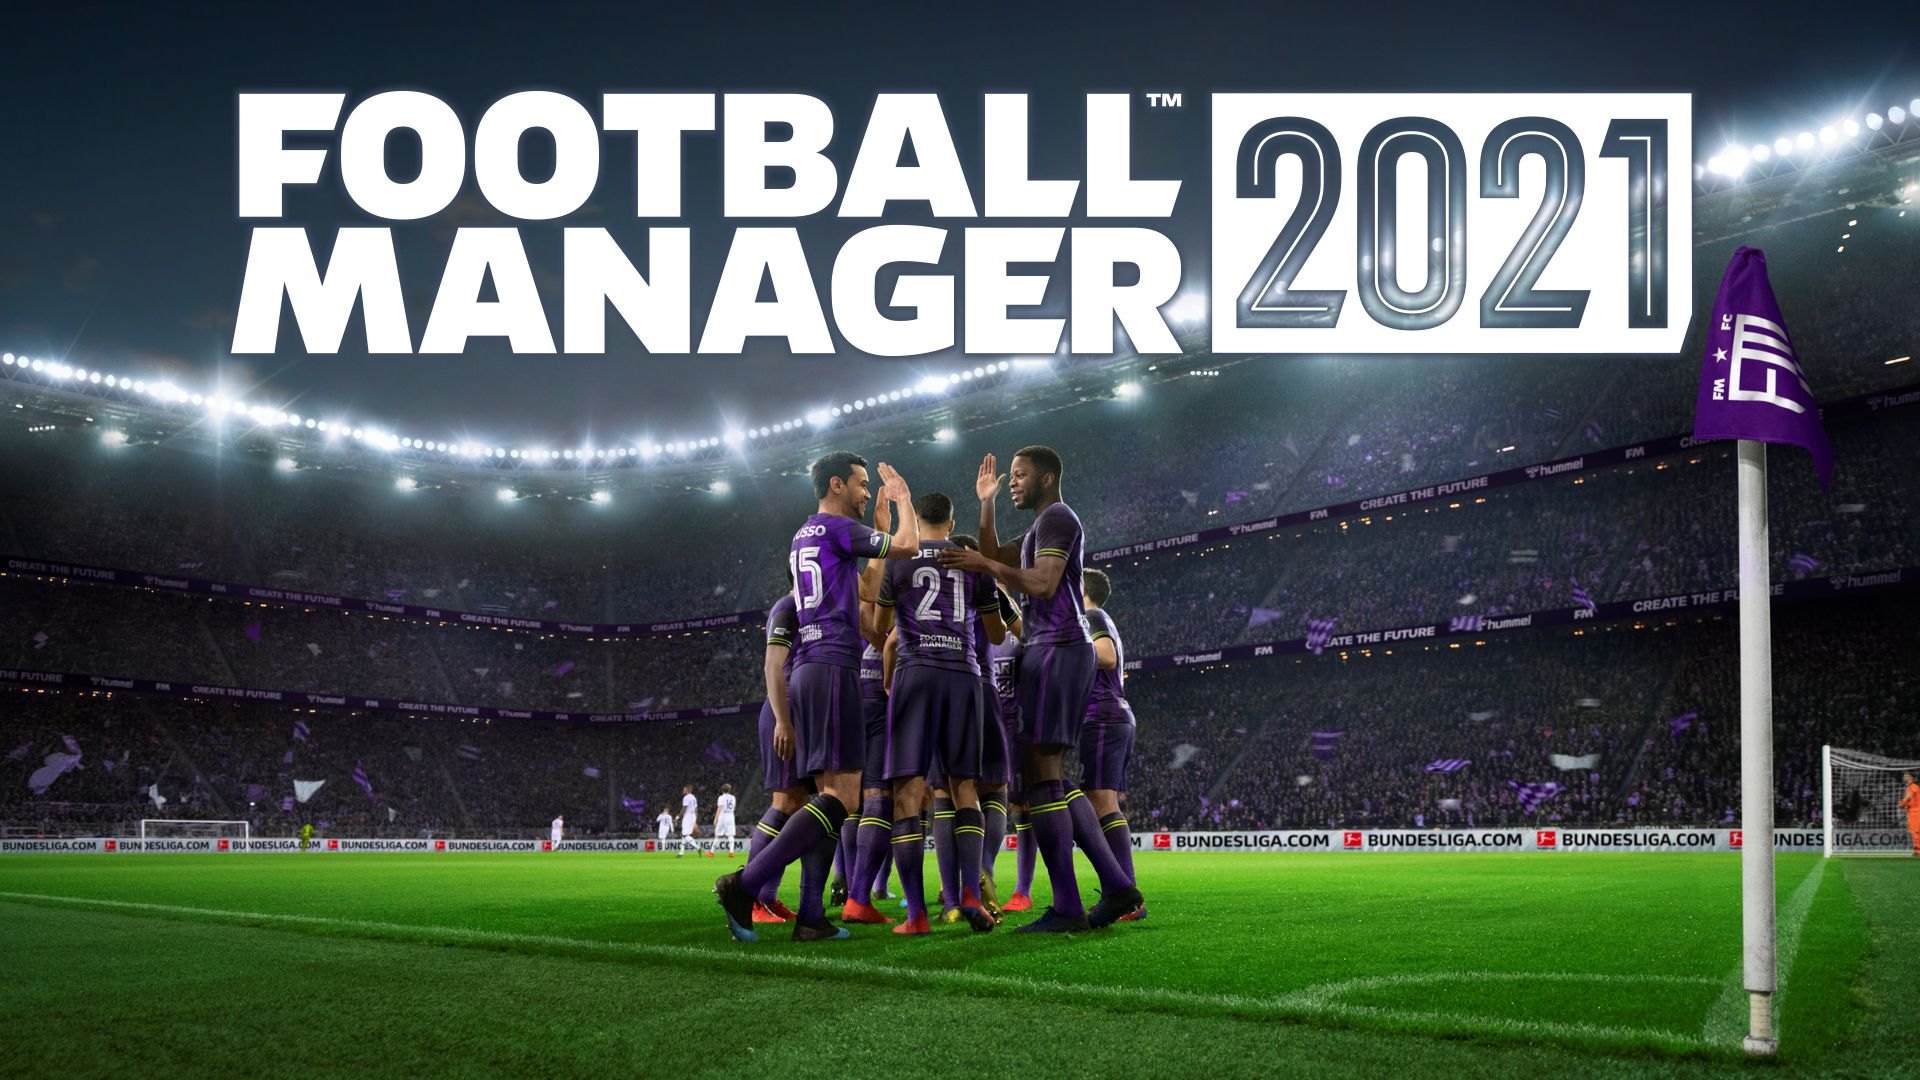 Football Manager 21 プレーヤーとチームの本名を取得する方法